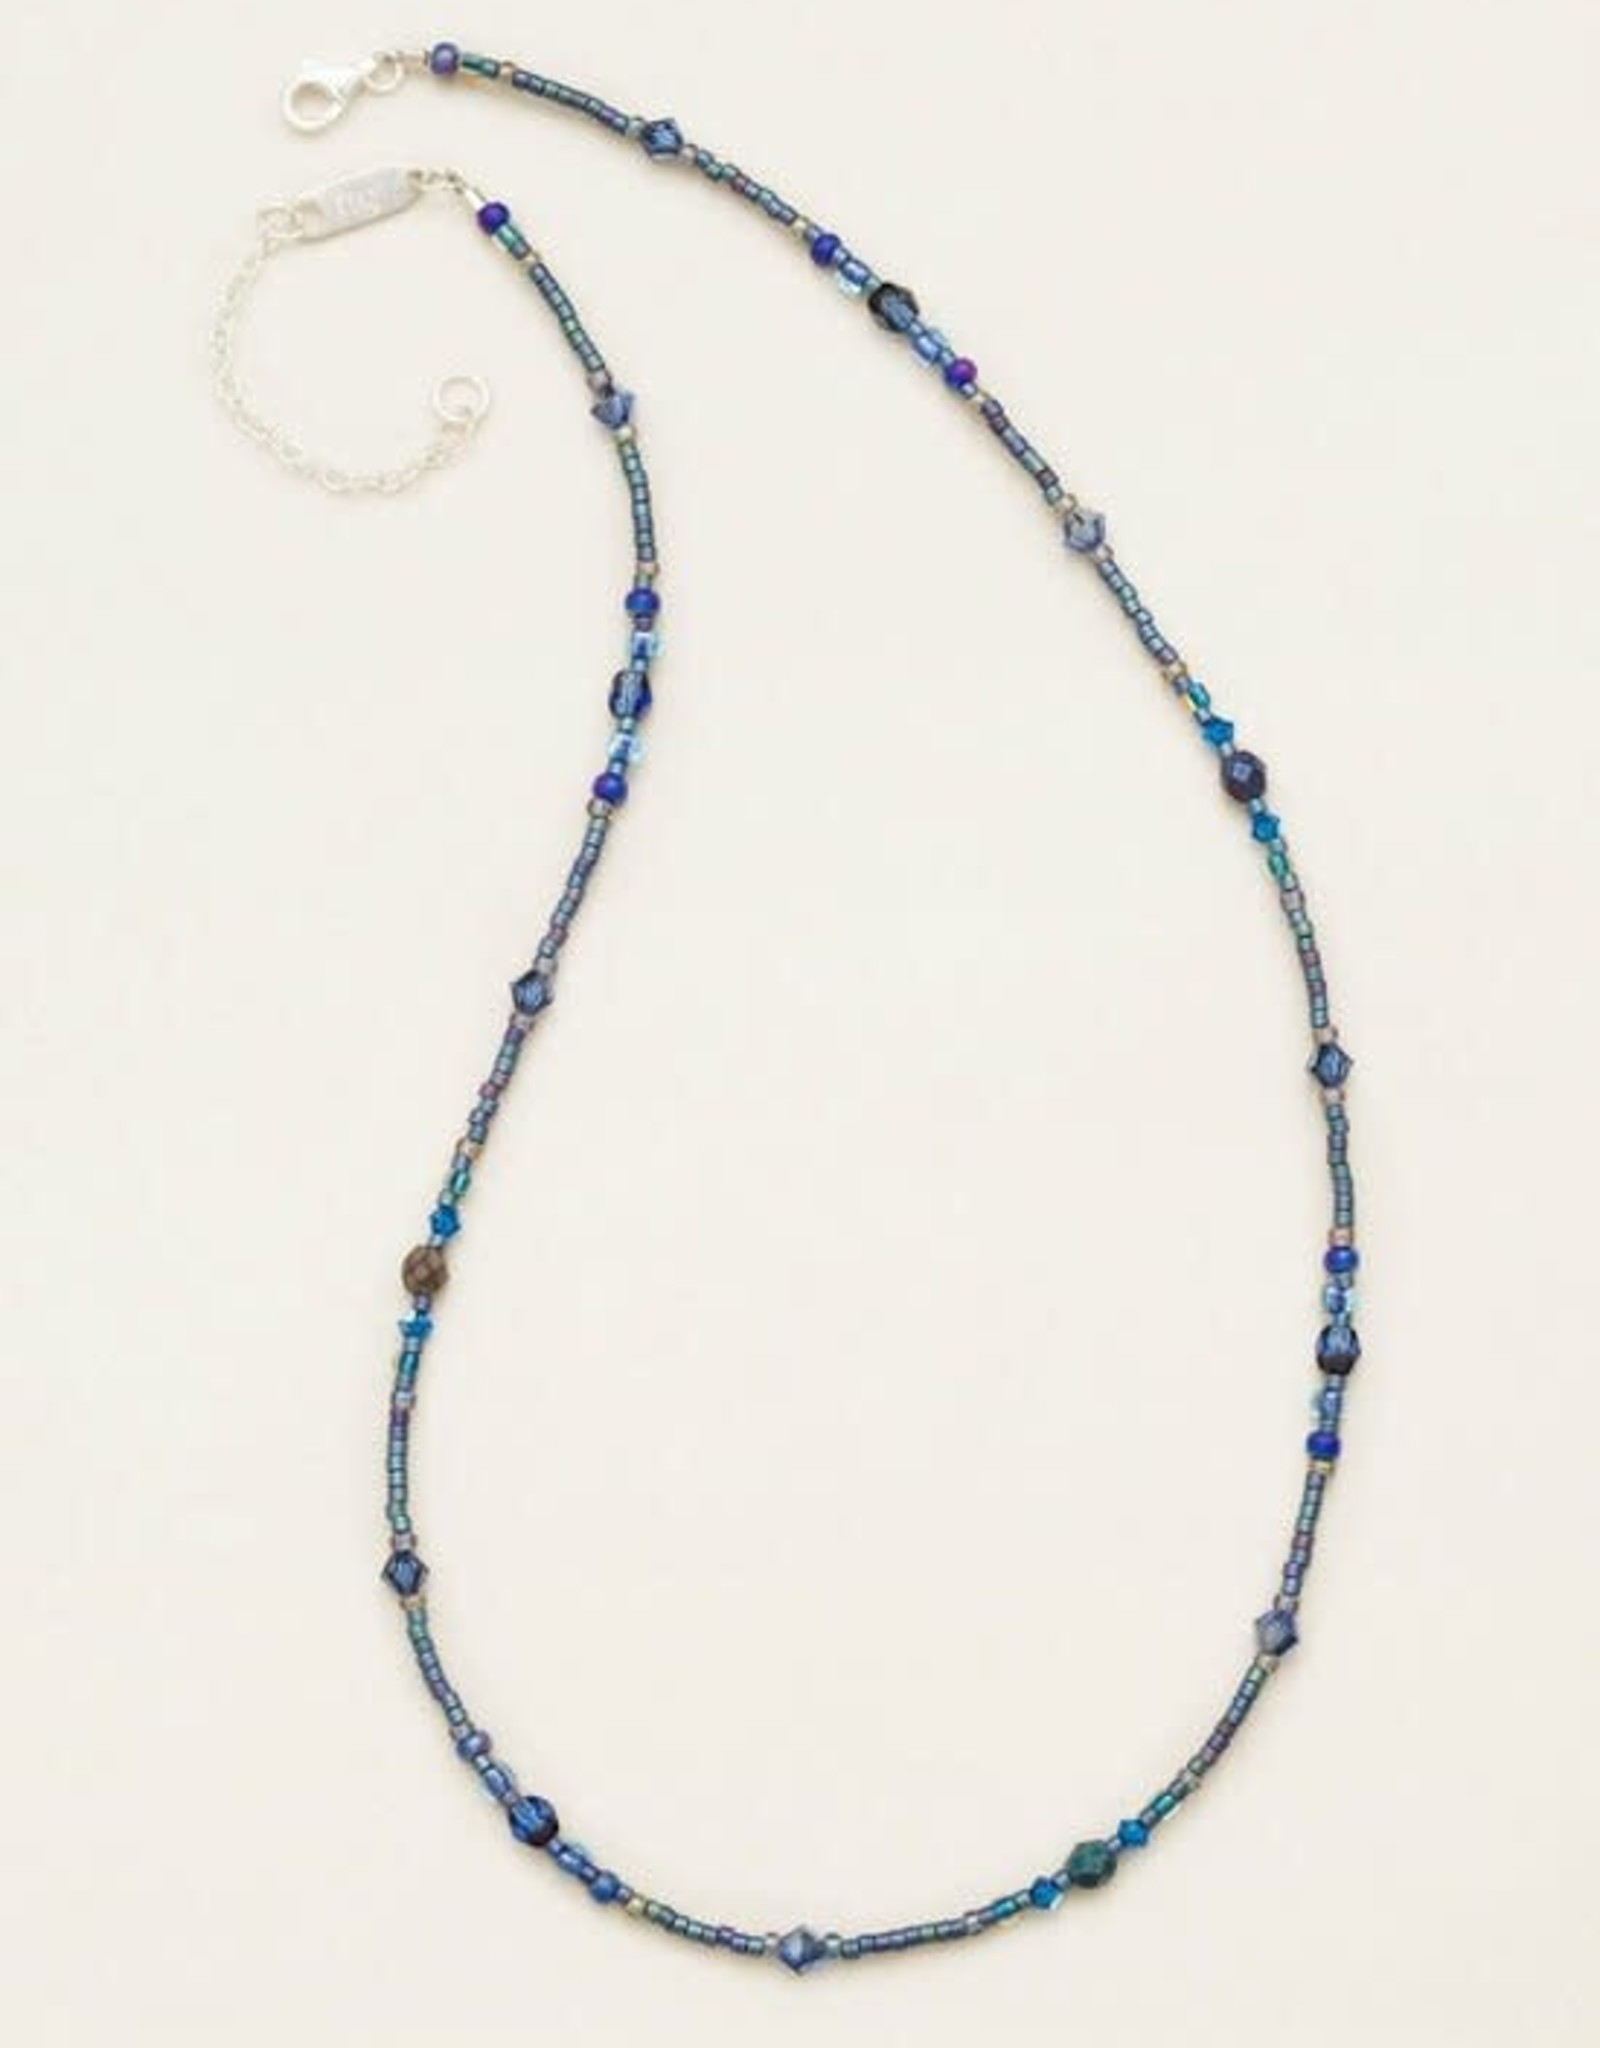 Sonoma Glass Bead Necklace